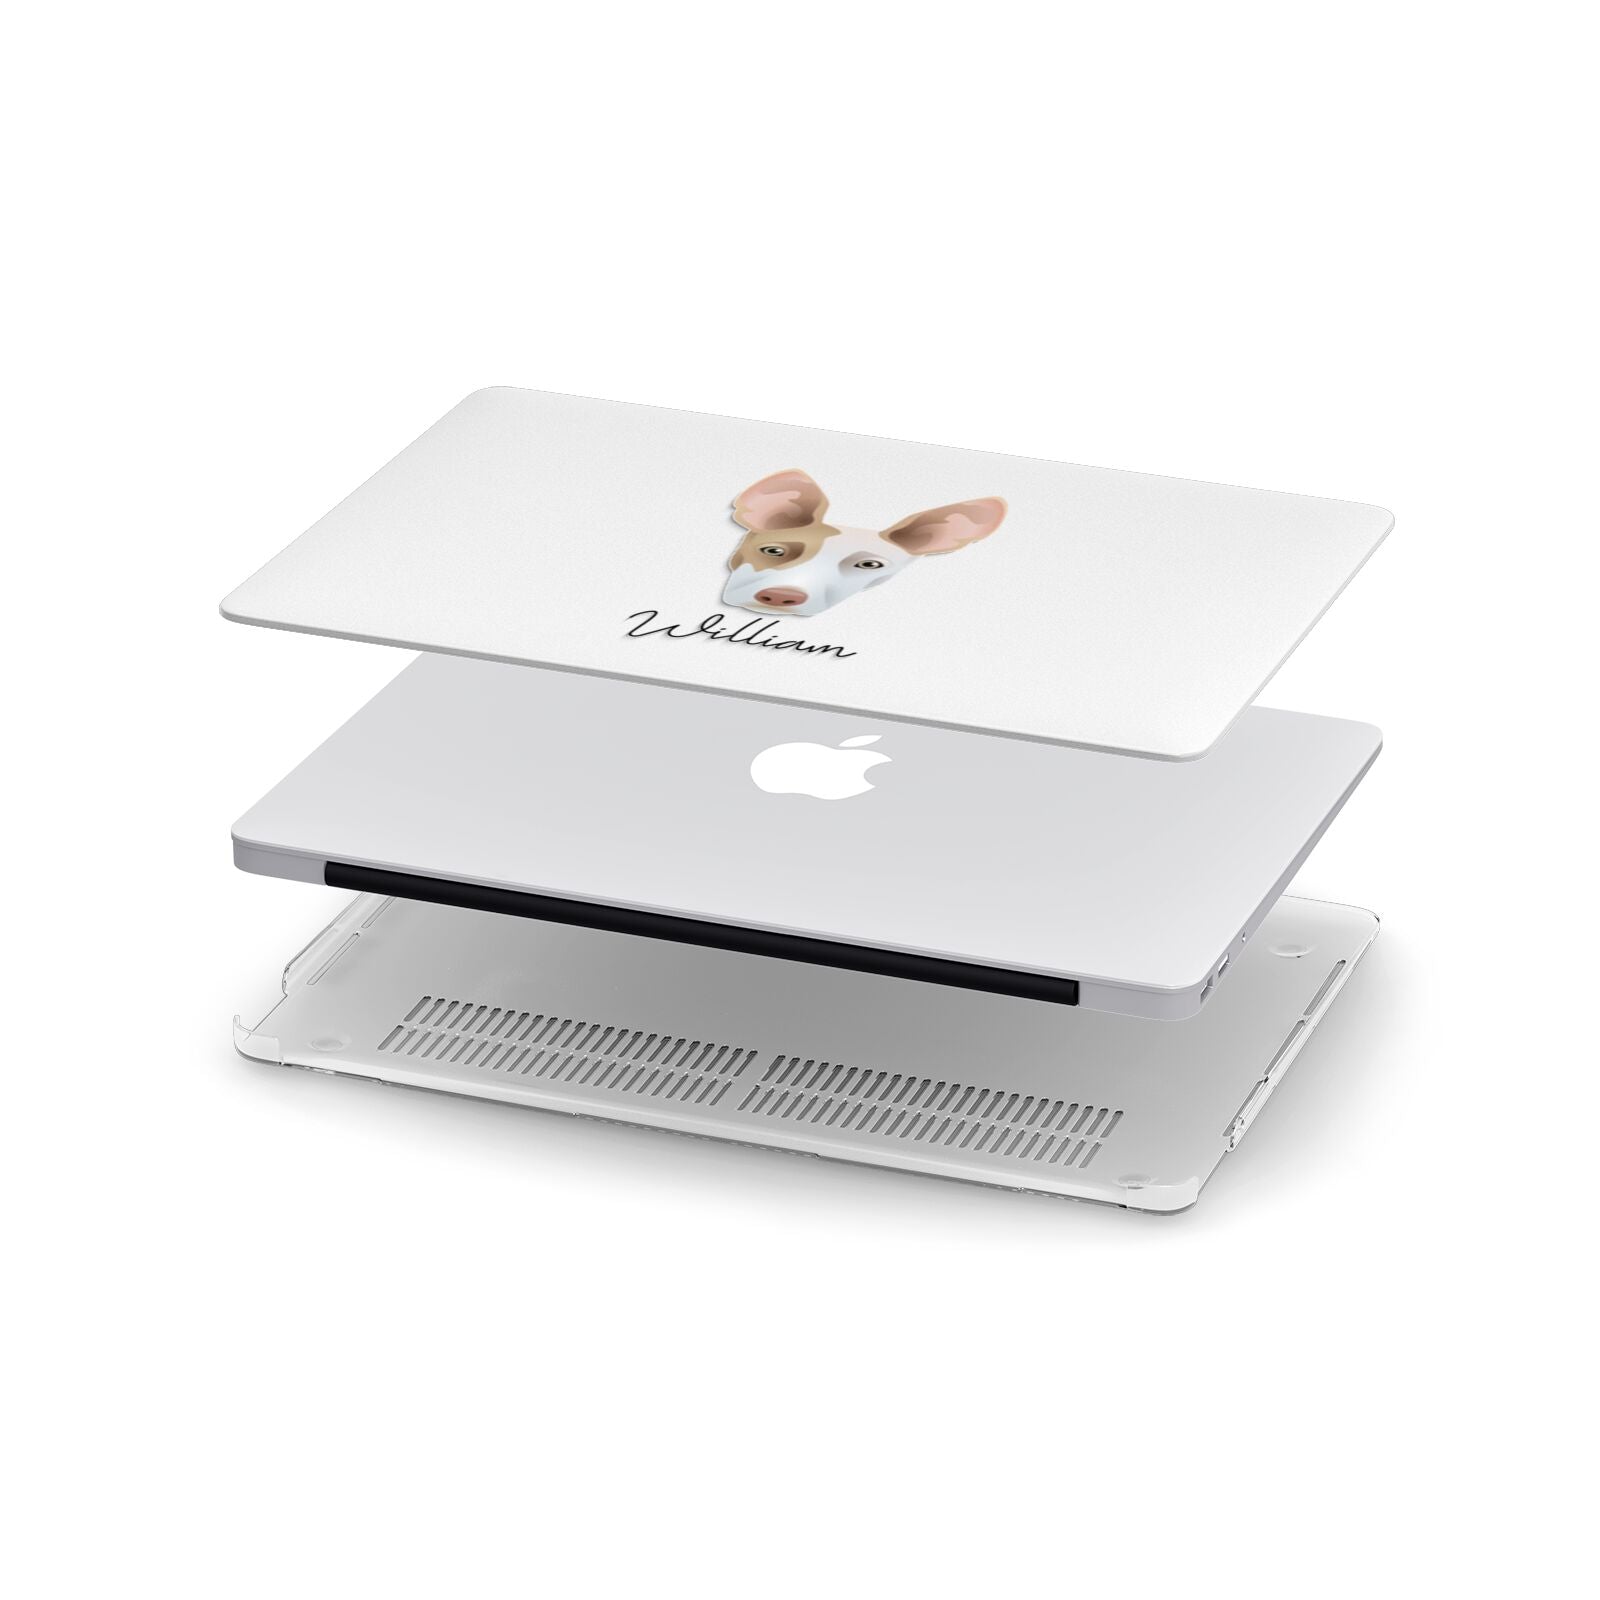 Ibizan Hound Personalised Apple MacBook Case in Detail